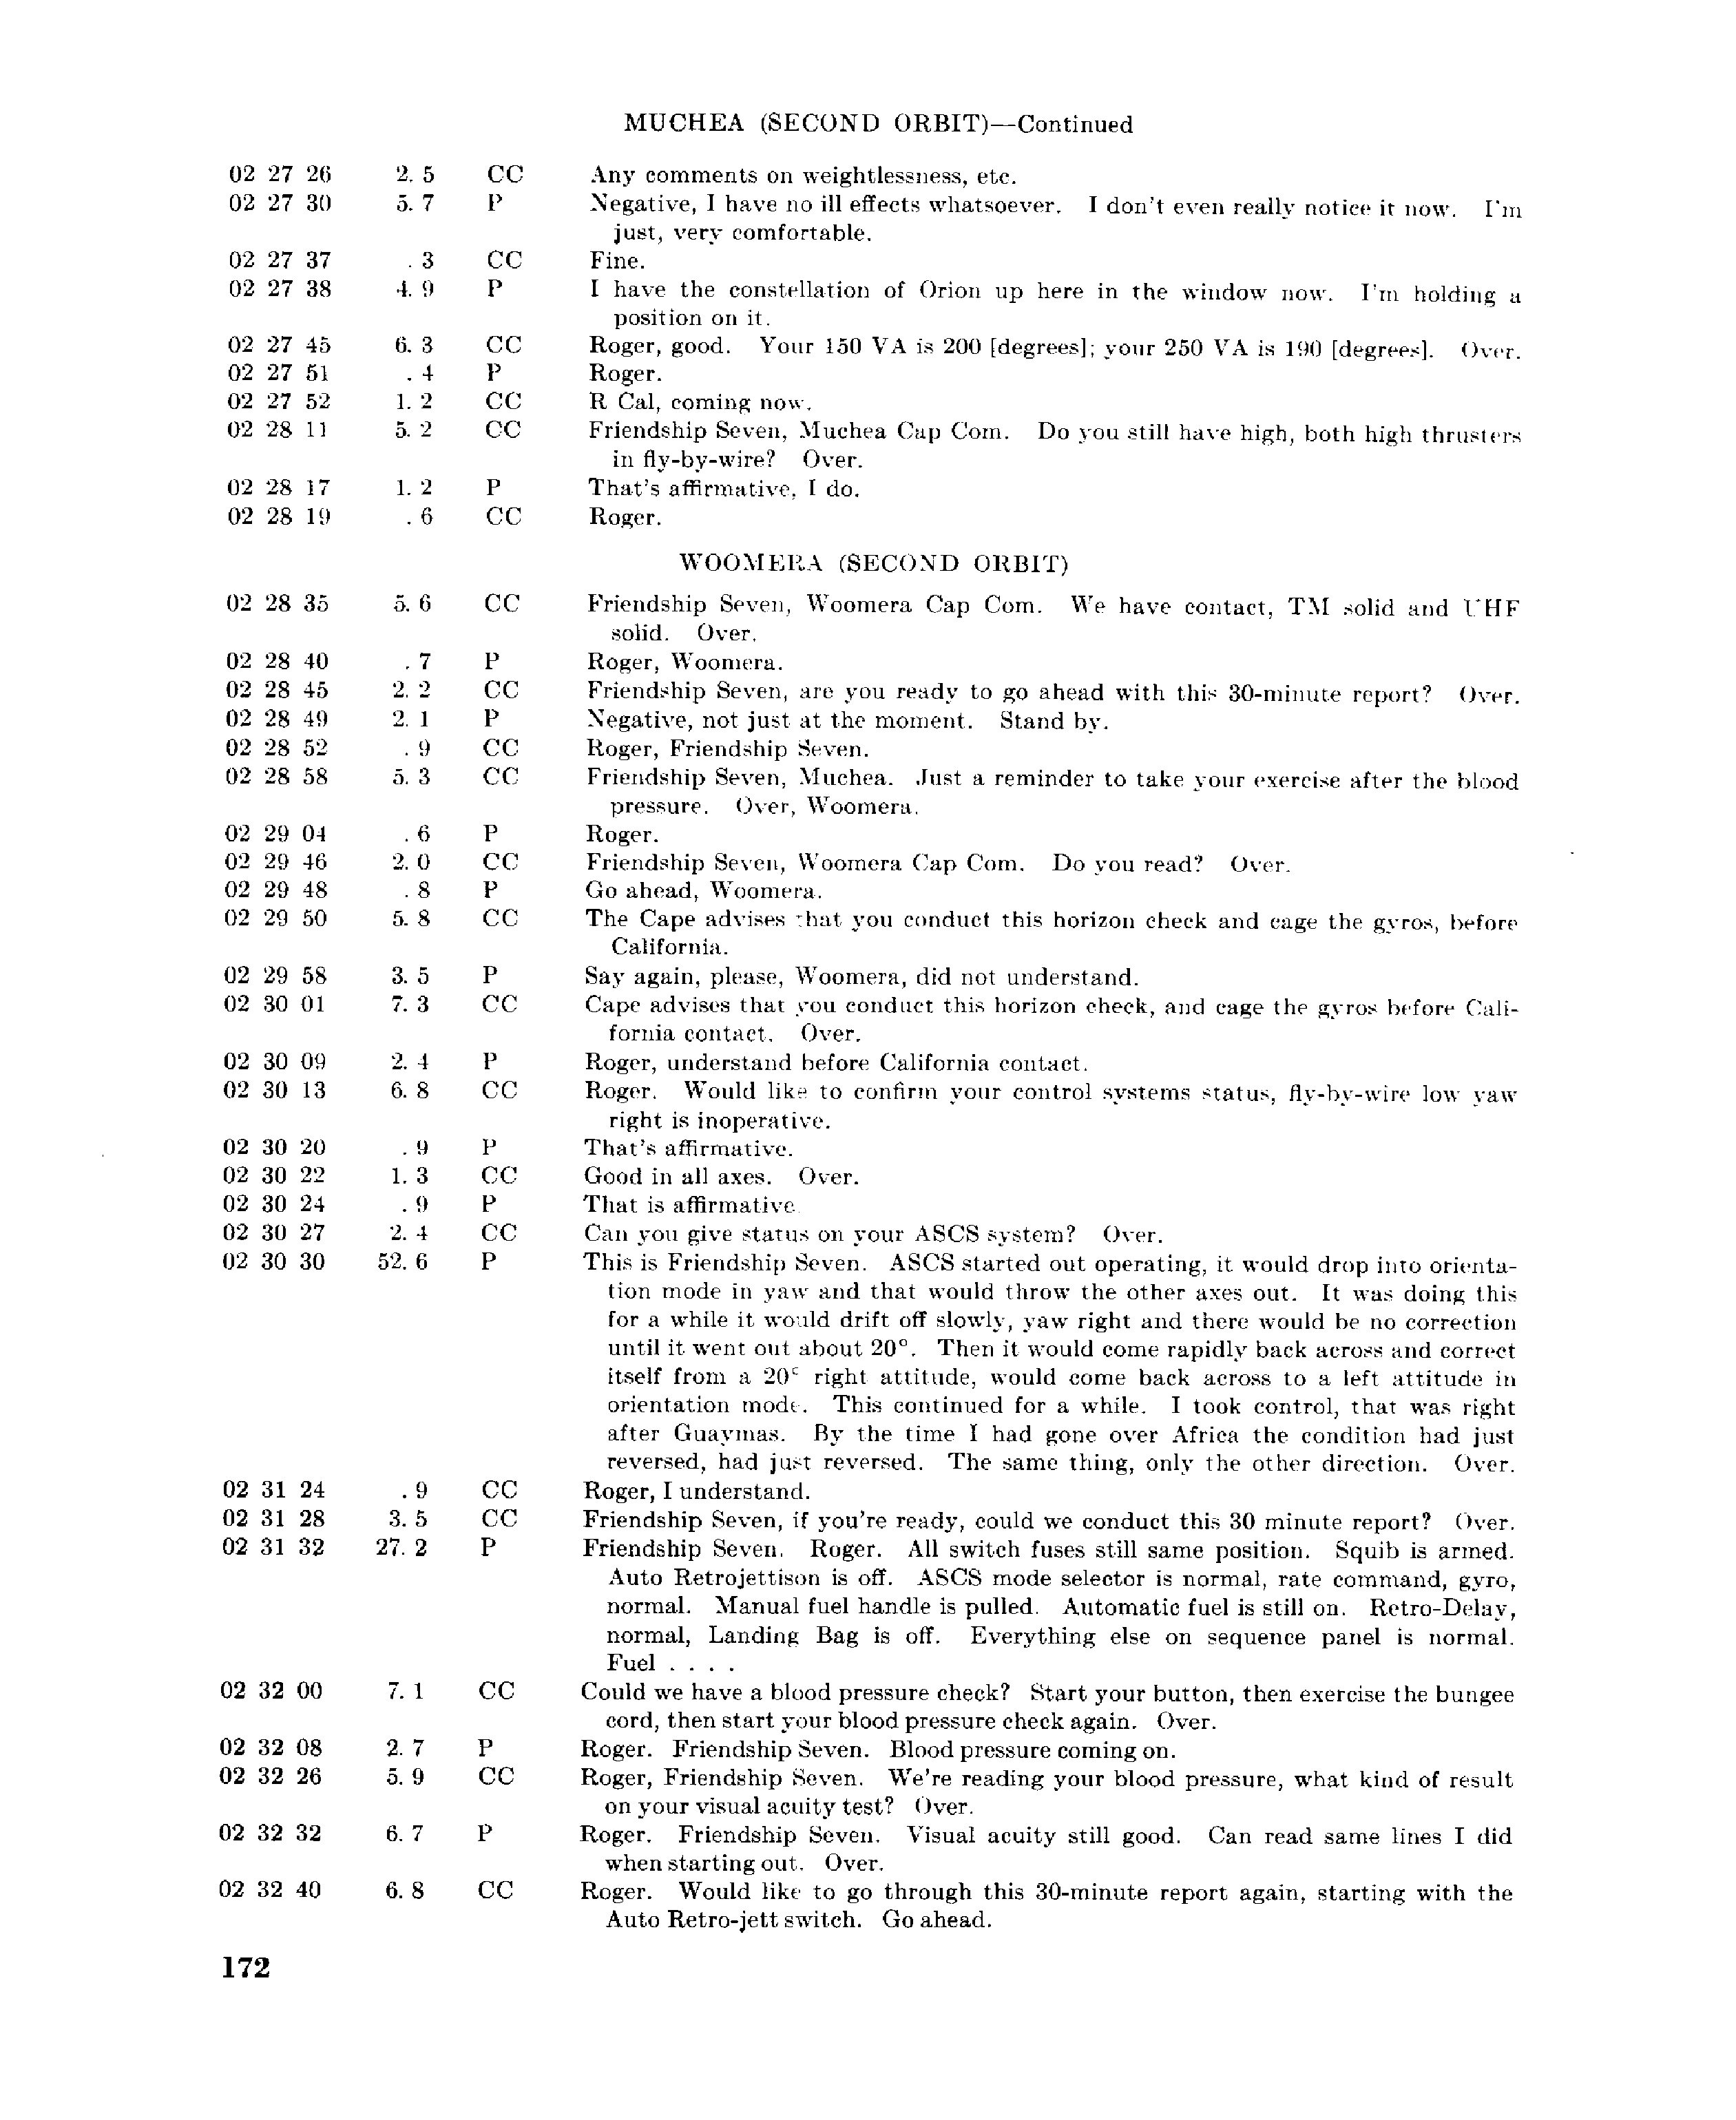 Page 171 of Mercury 6’s original transcript